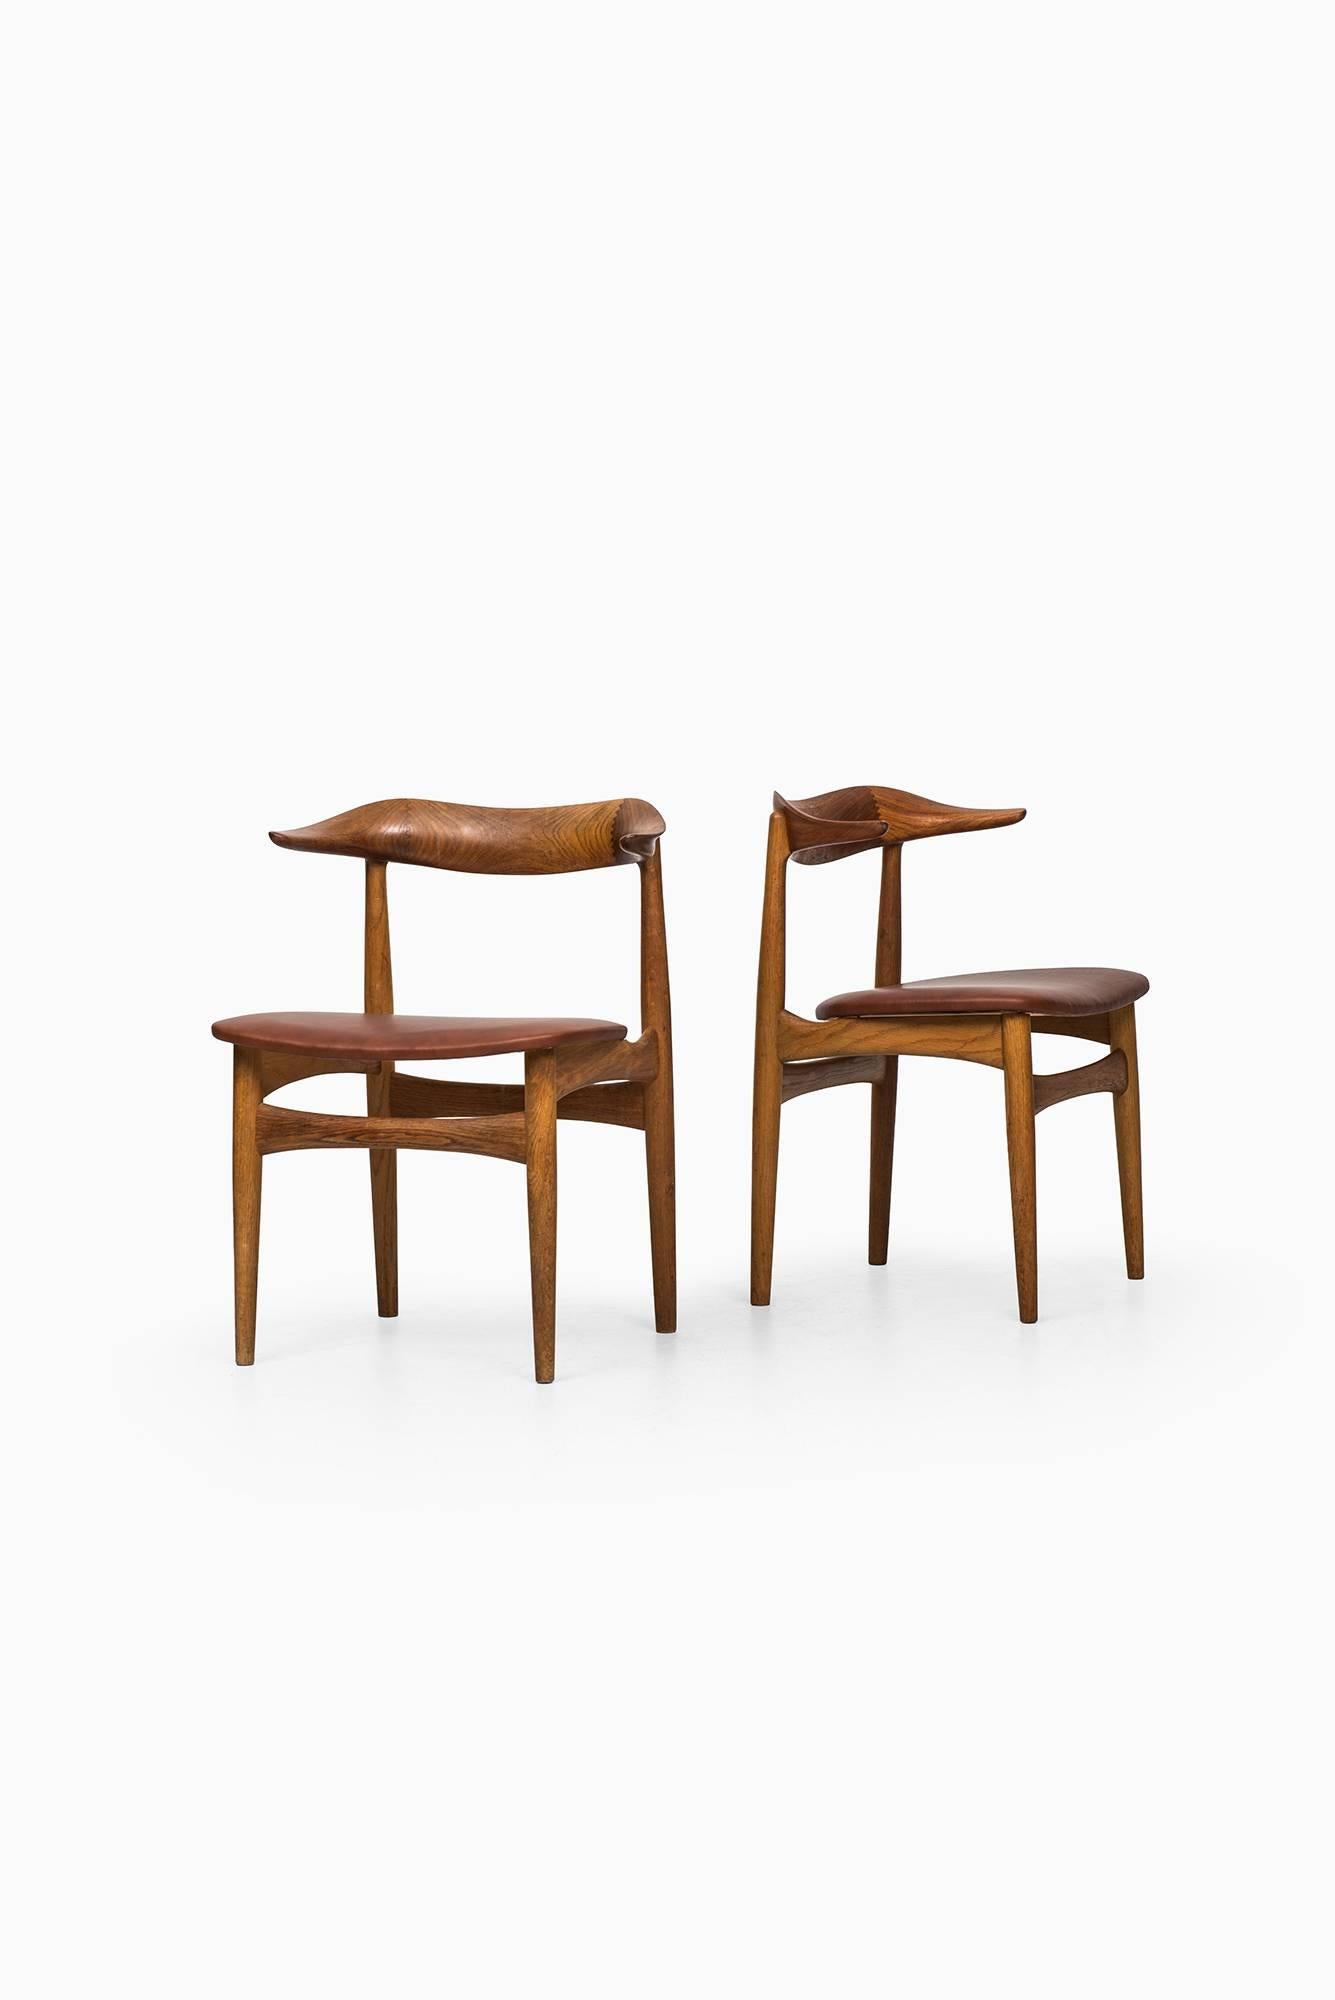 Danish Cowhorn Chairs Designed by Knud Faerch Produced by Slagelse Møbelfabrik